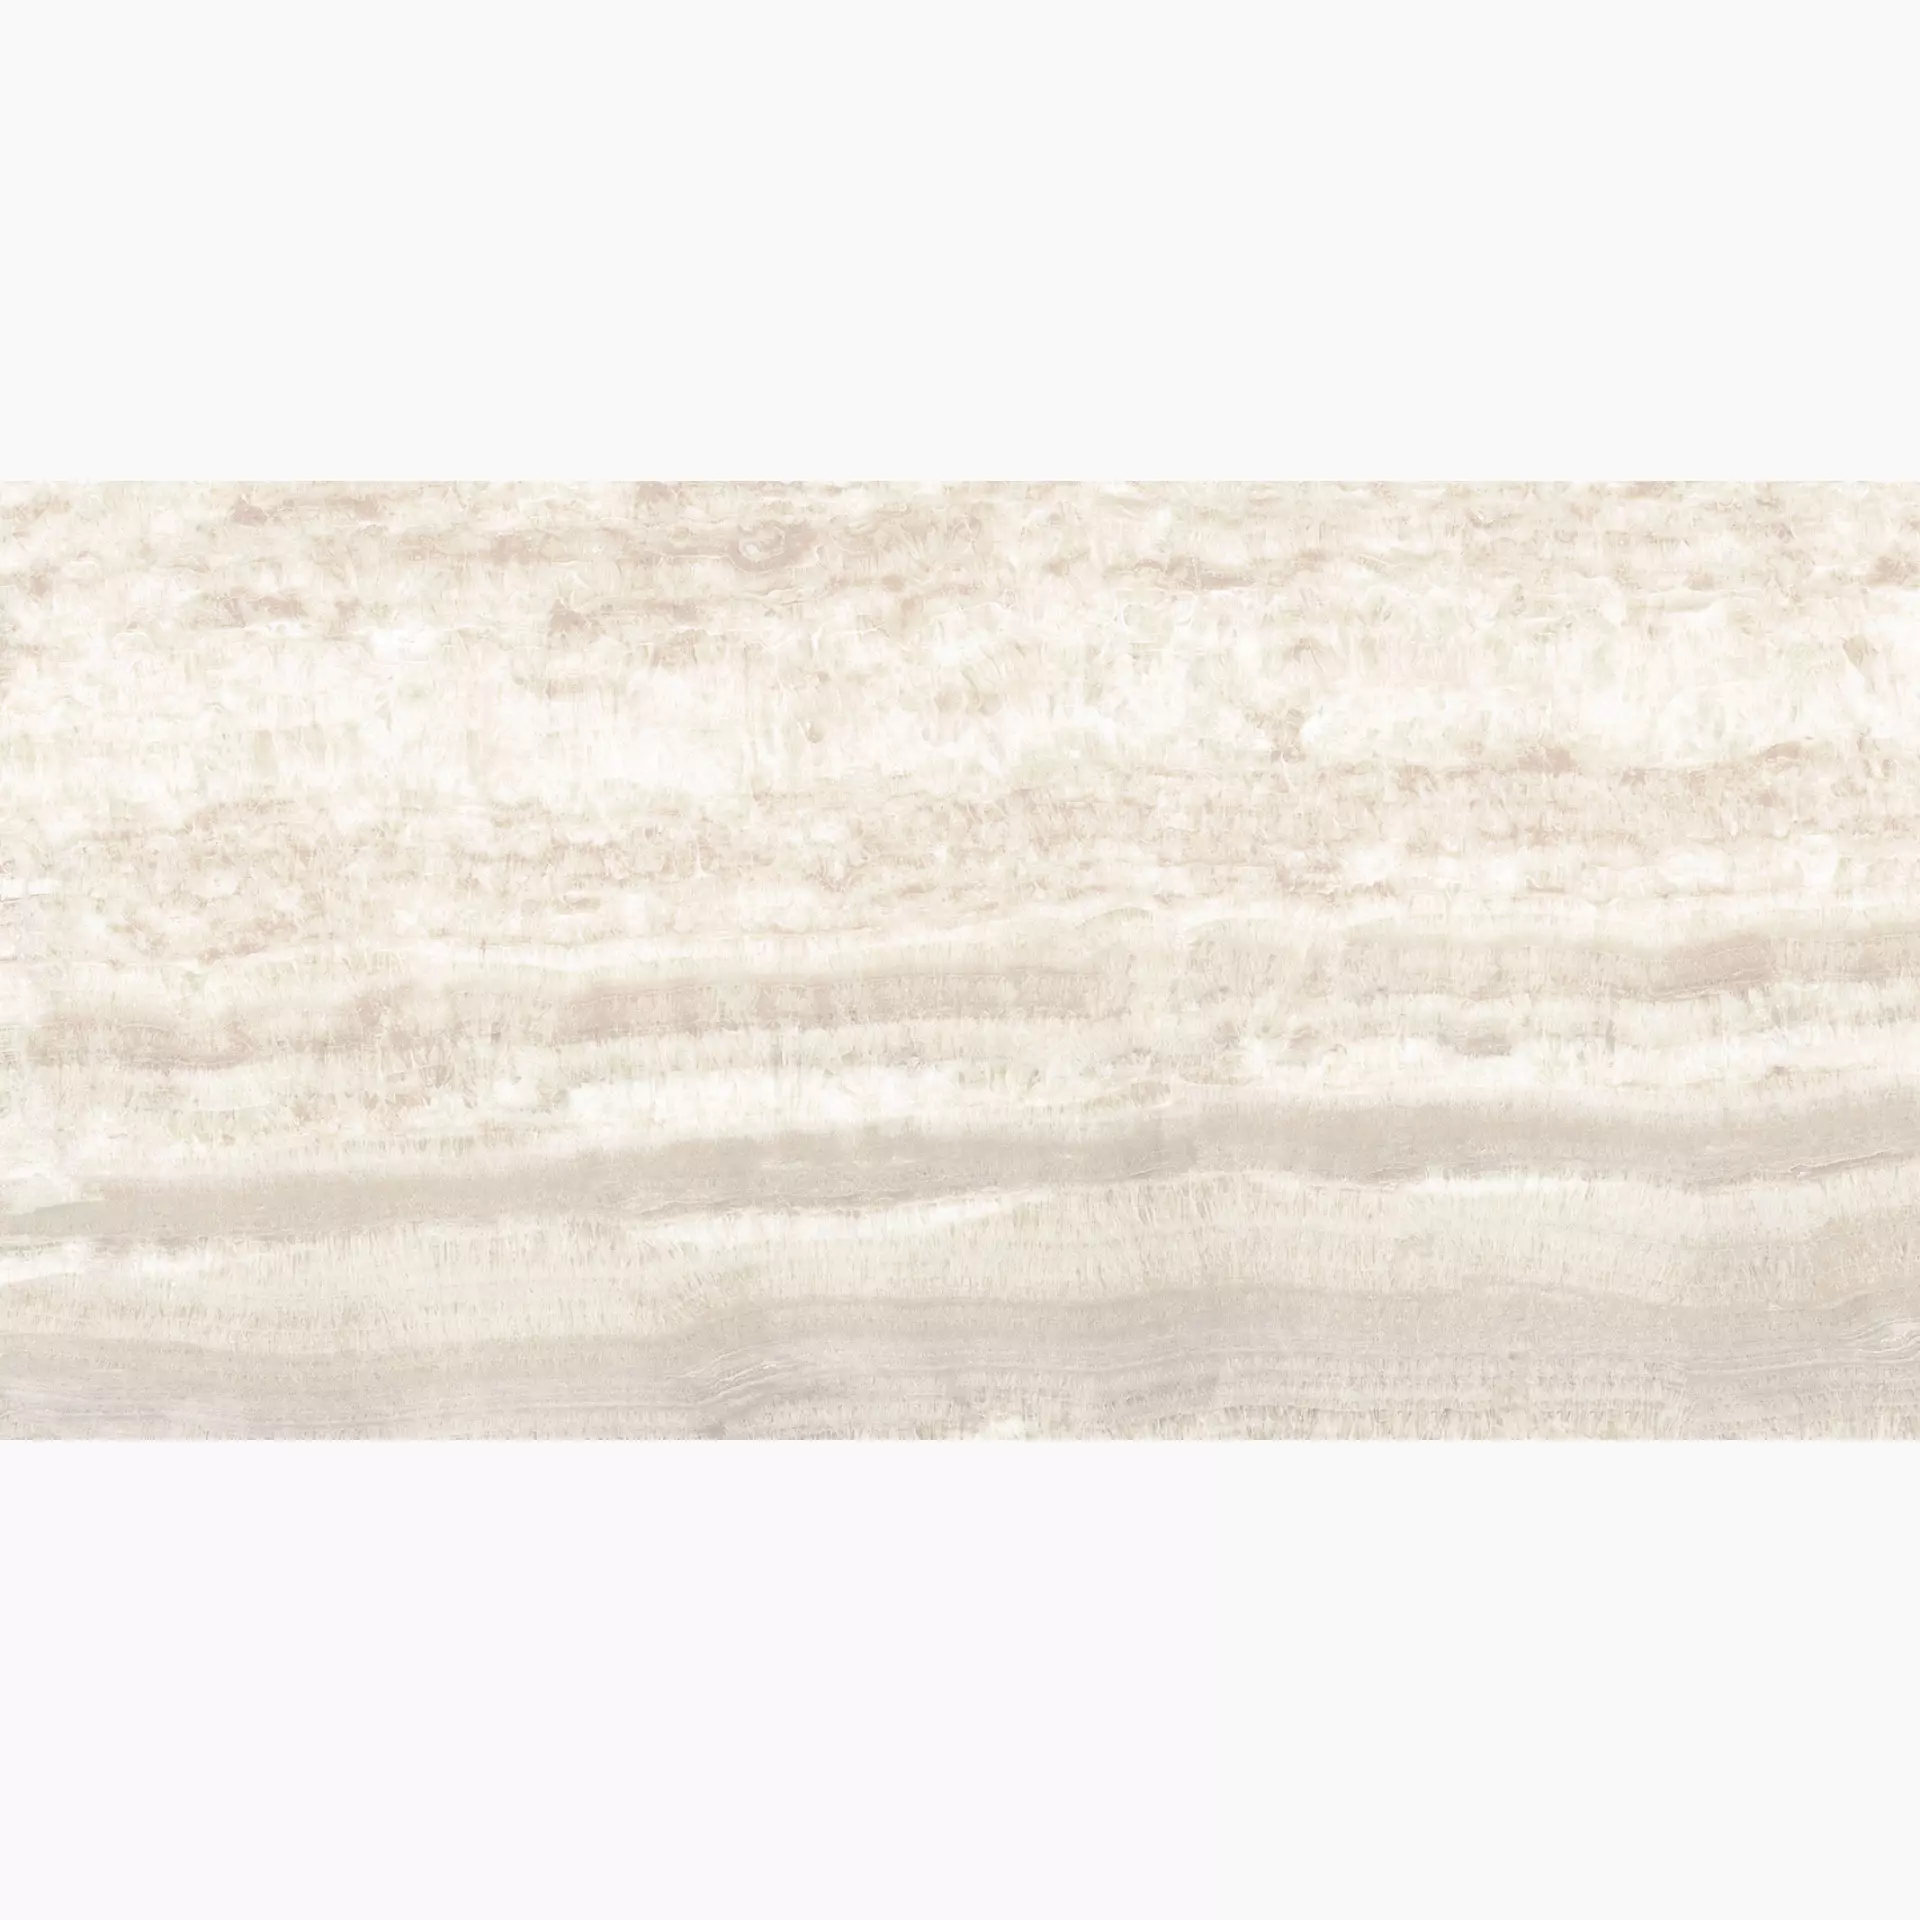 Florim Onyx Of Cerim Sand Naturale – Matt 753700 30x60cm rectified 9mm